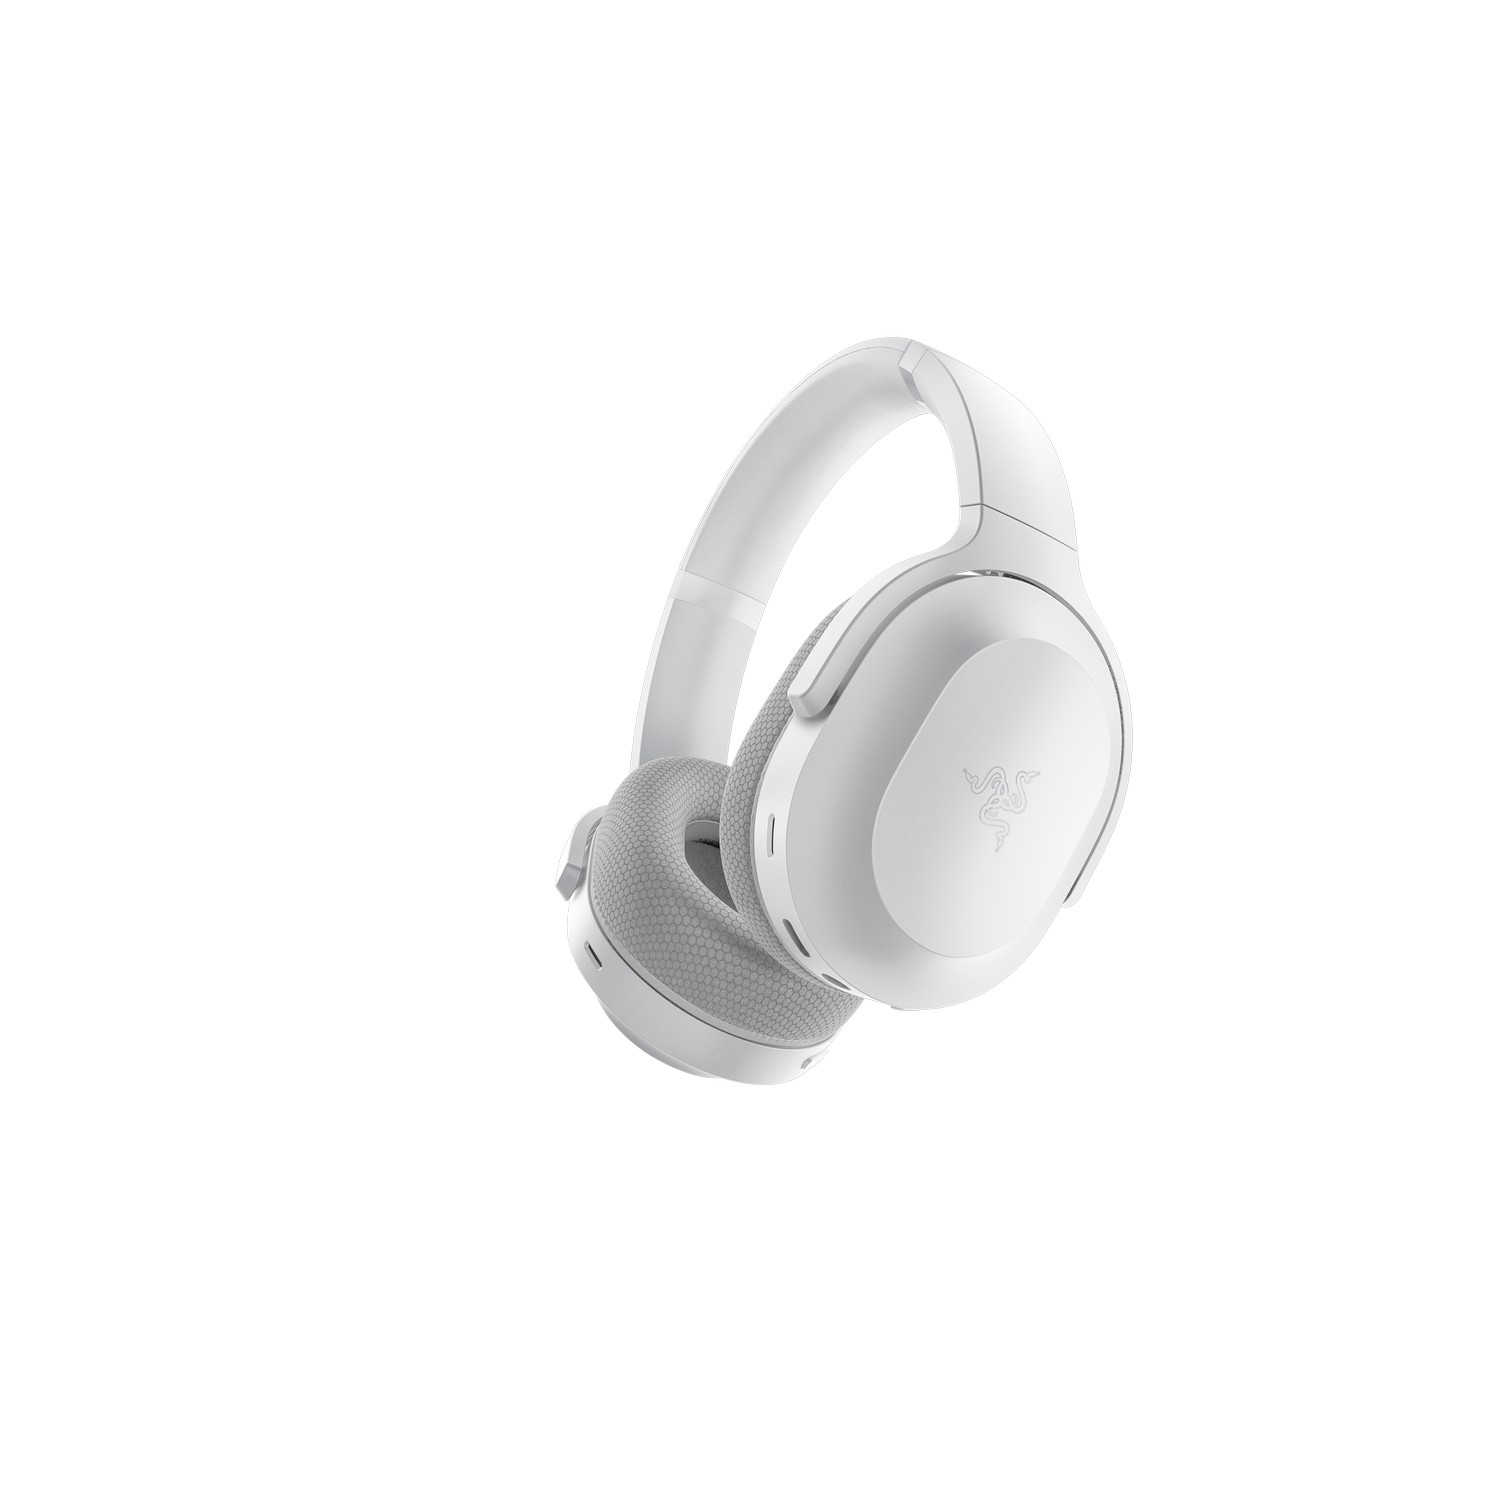 Razer Barracuda Wireless/Bluetooth Gaming Headset - Mercury White (RZ04-03790200-R3M1)